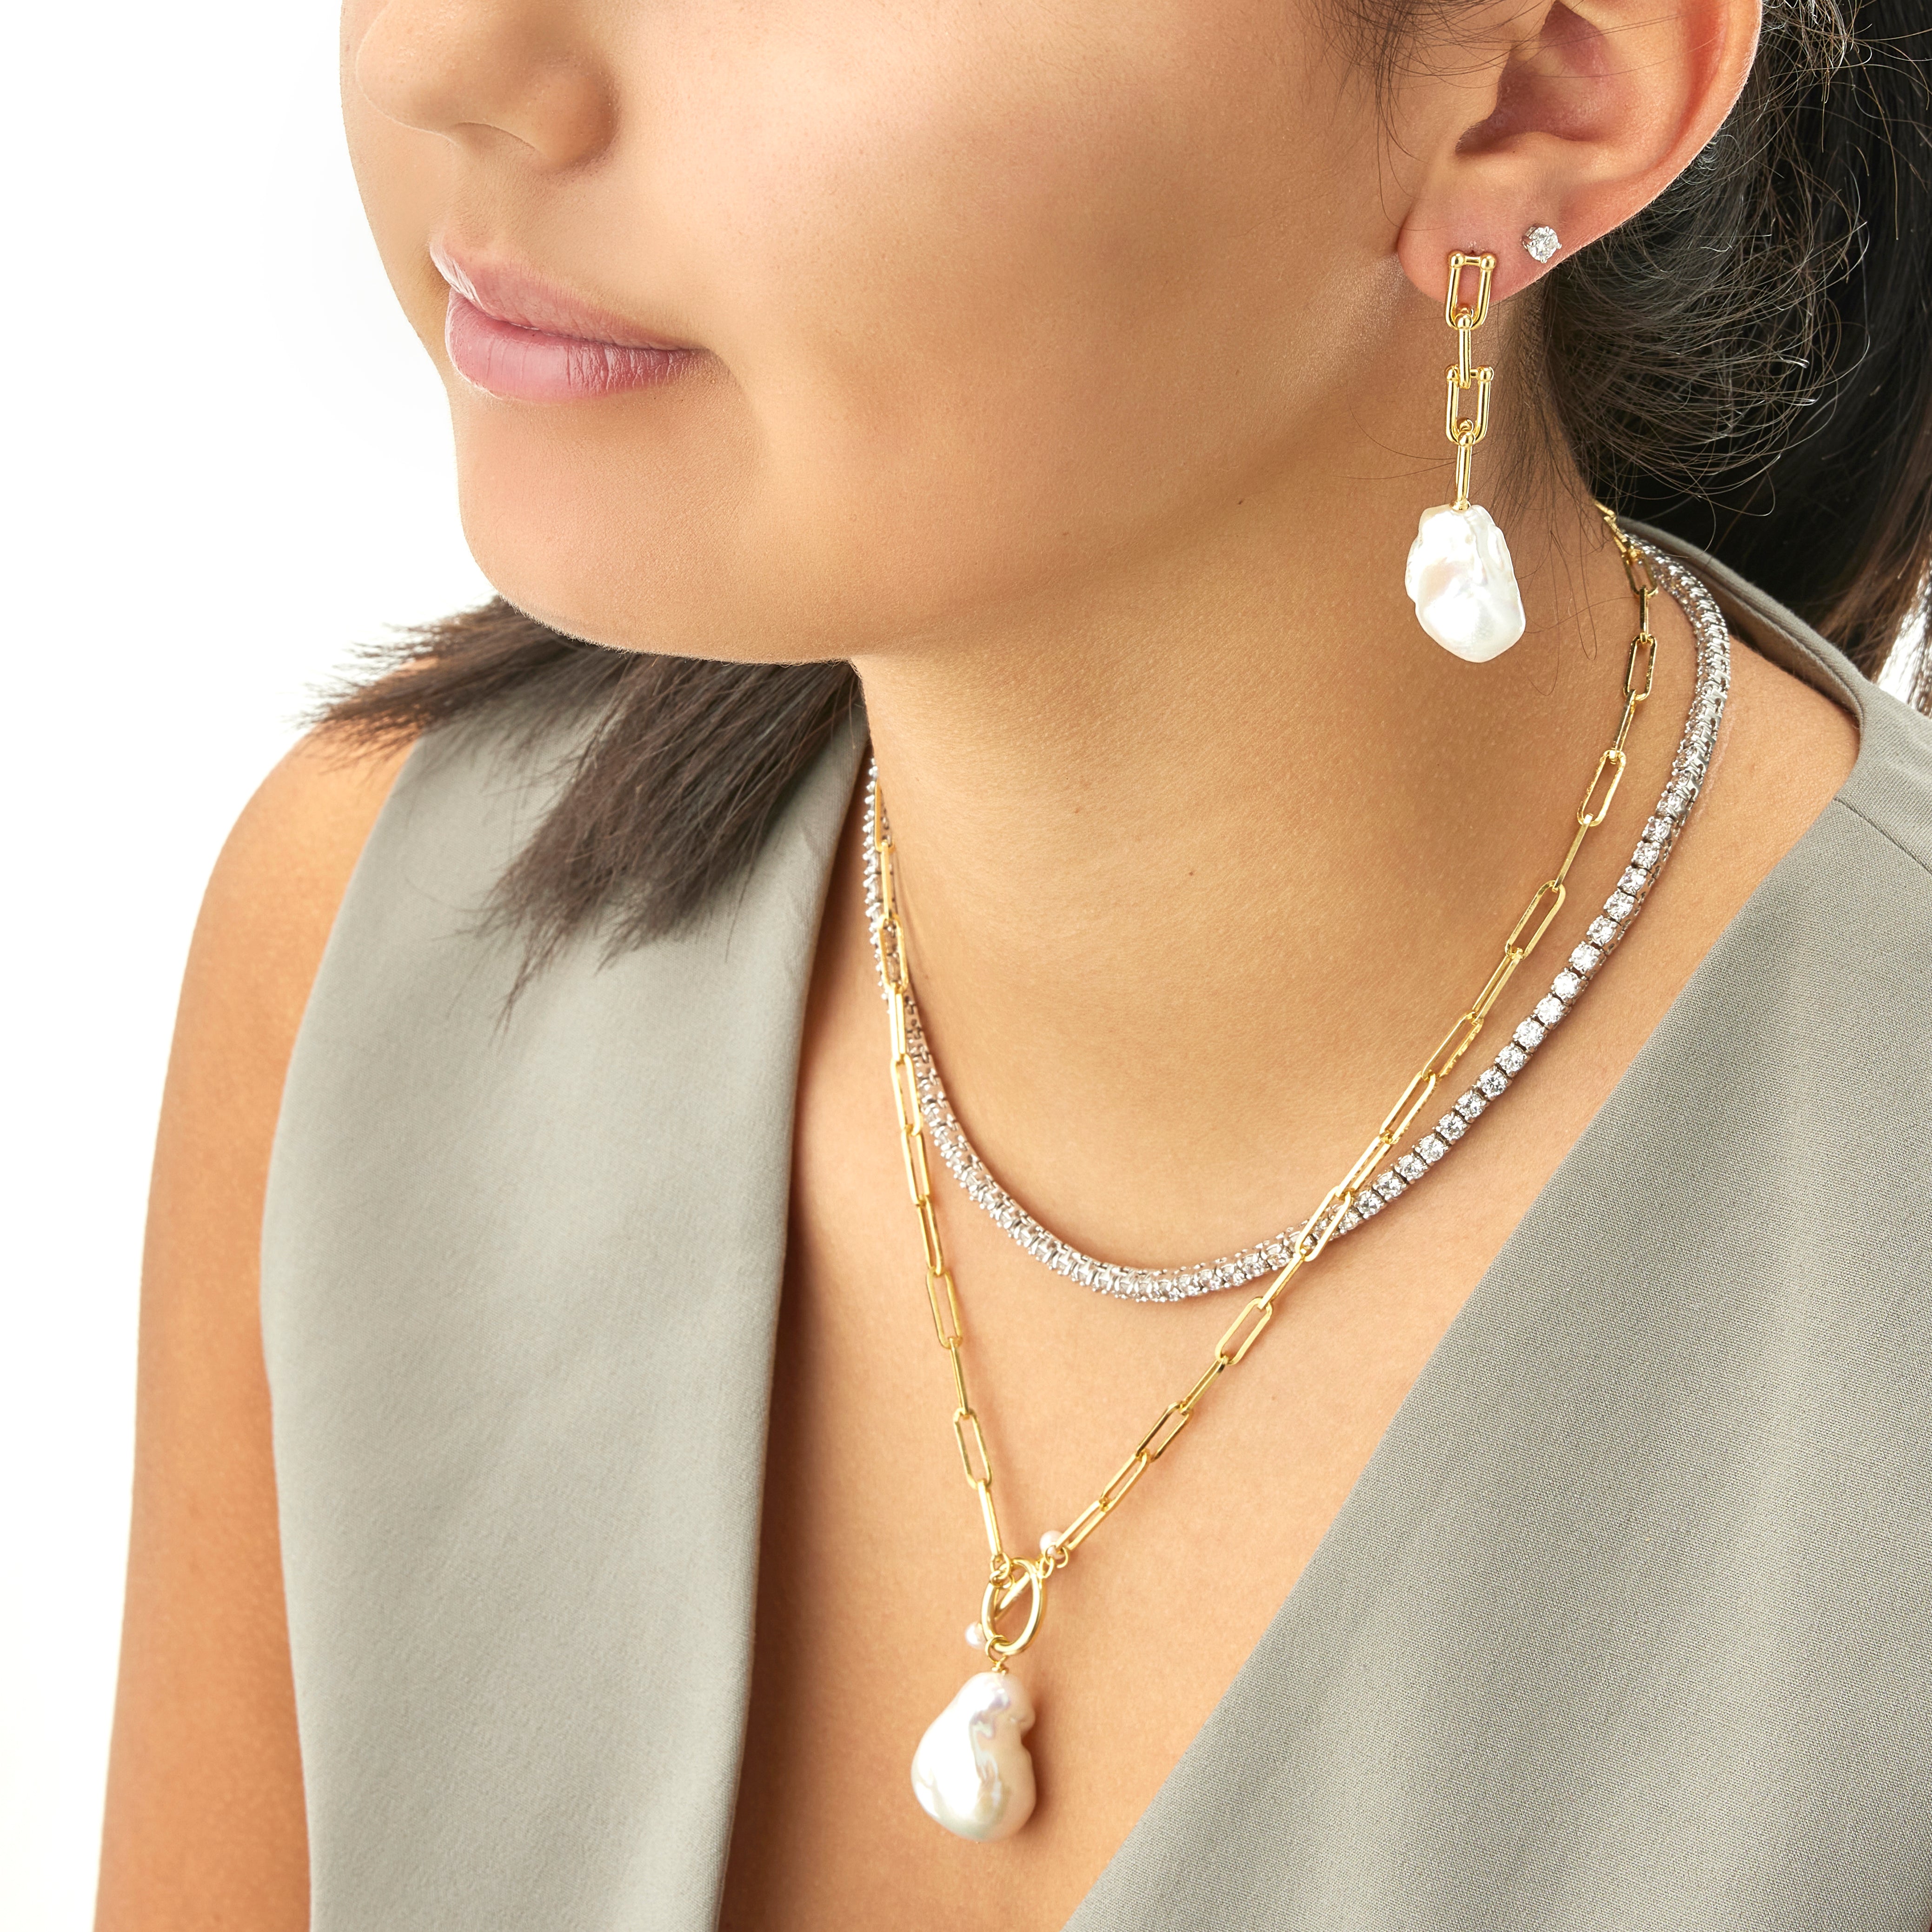 Gorgeous Gold & Pearl Pendant Necklaces for Sale Online Page 14 - Susan Shaw